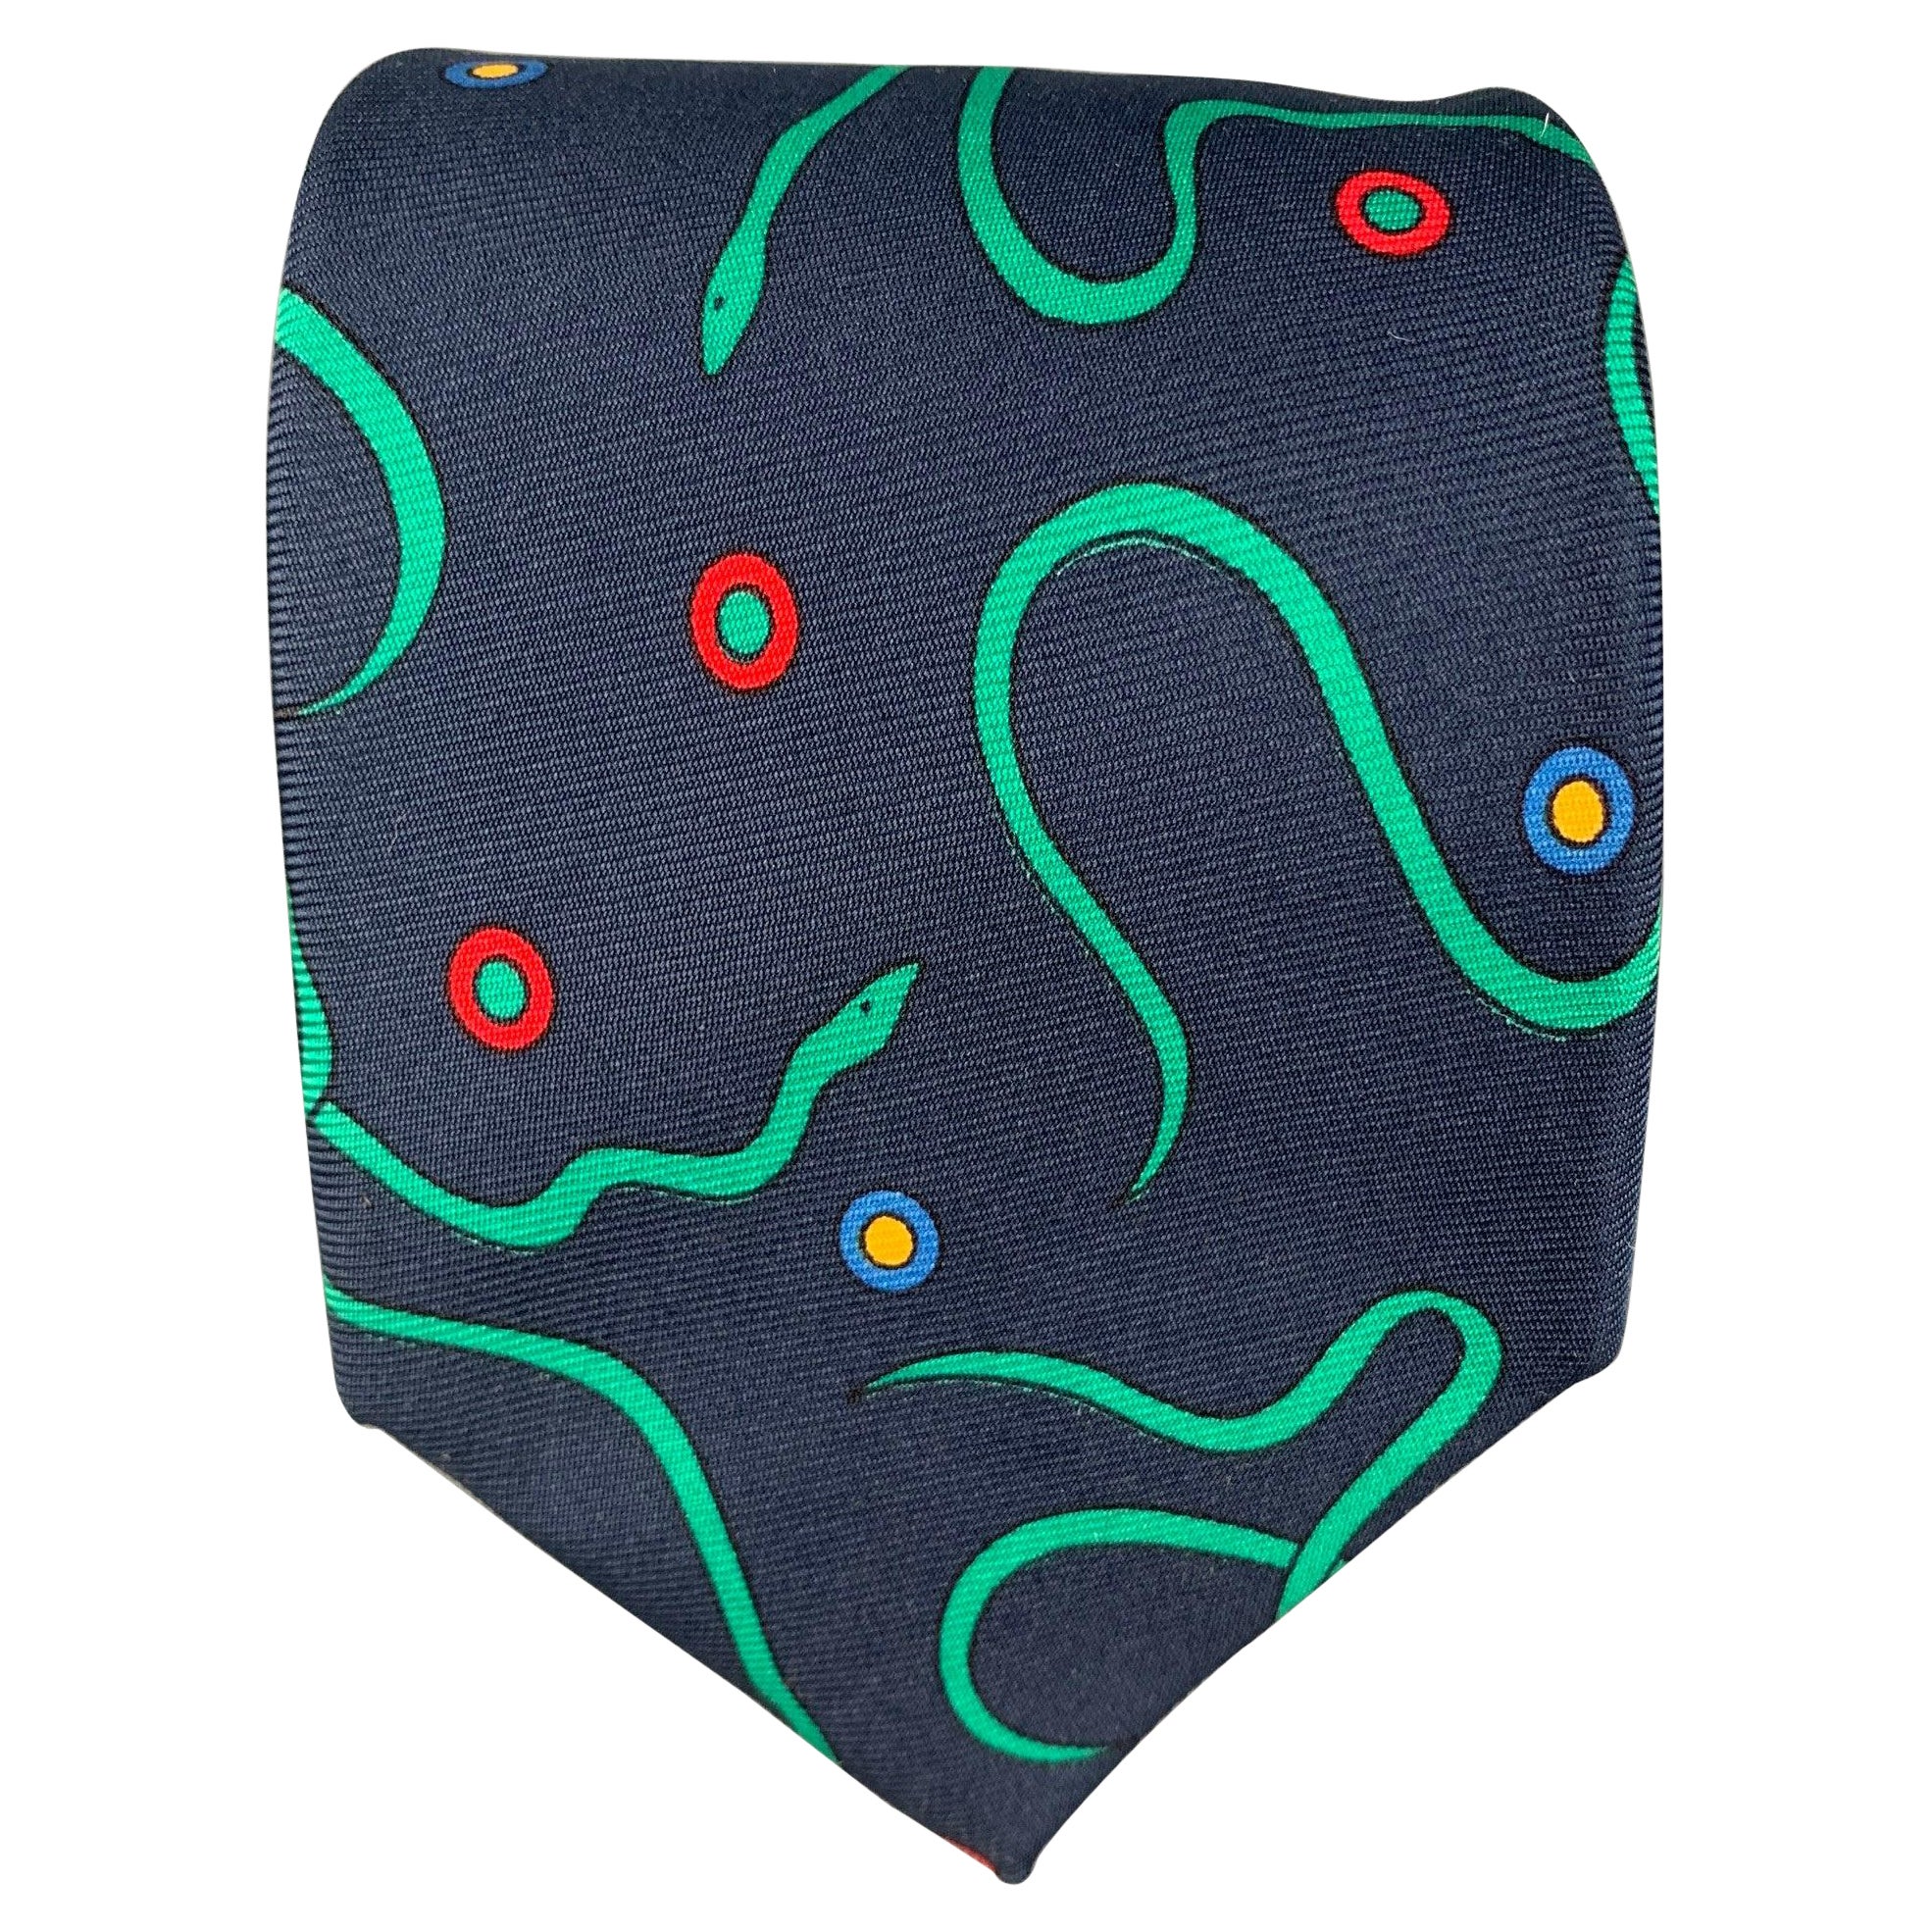 TURNBULL & ASSER cravate en soie imprimée serpent vert marine